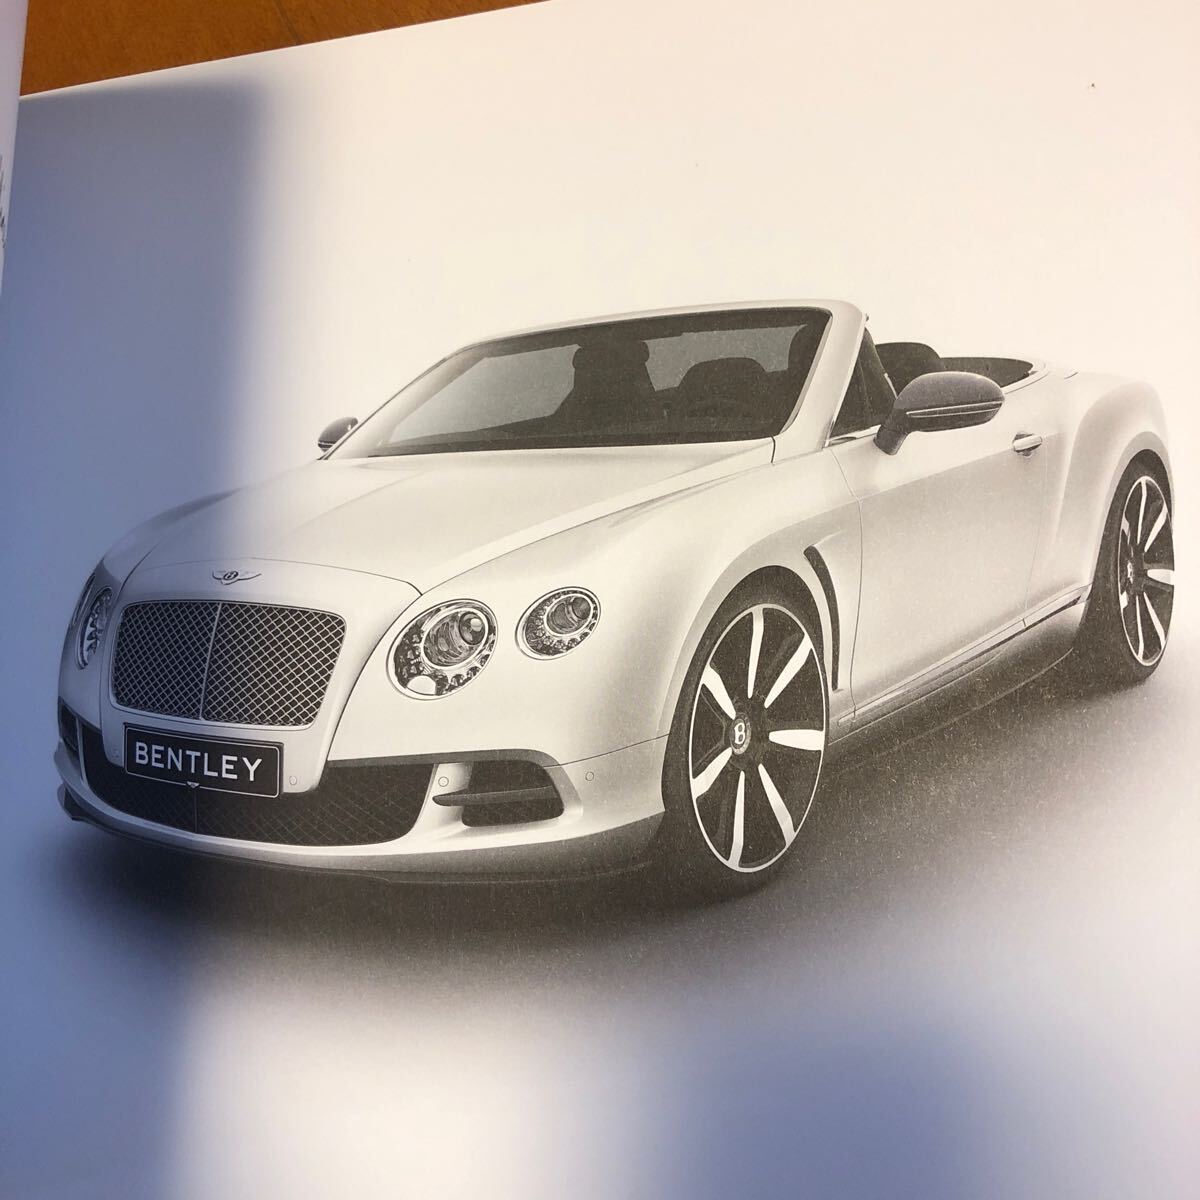  Bentley Continental GTC английский язык каталог 